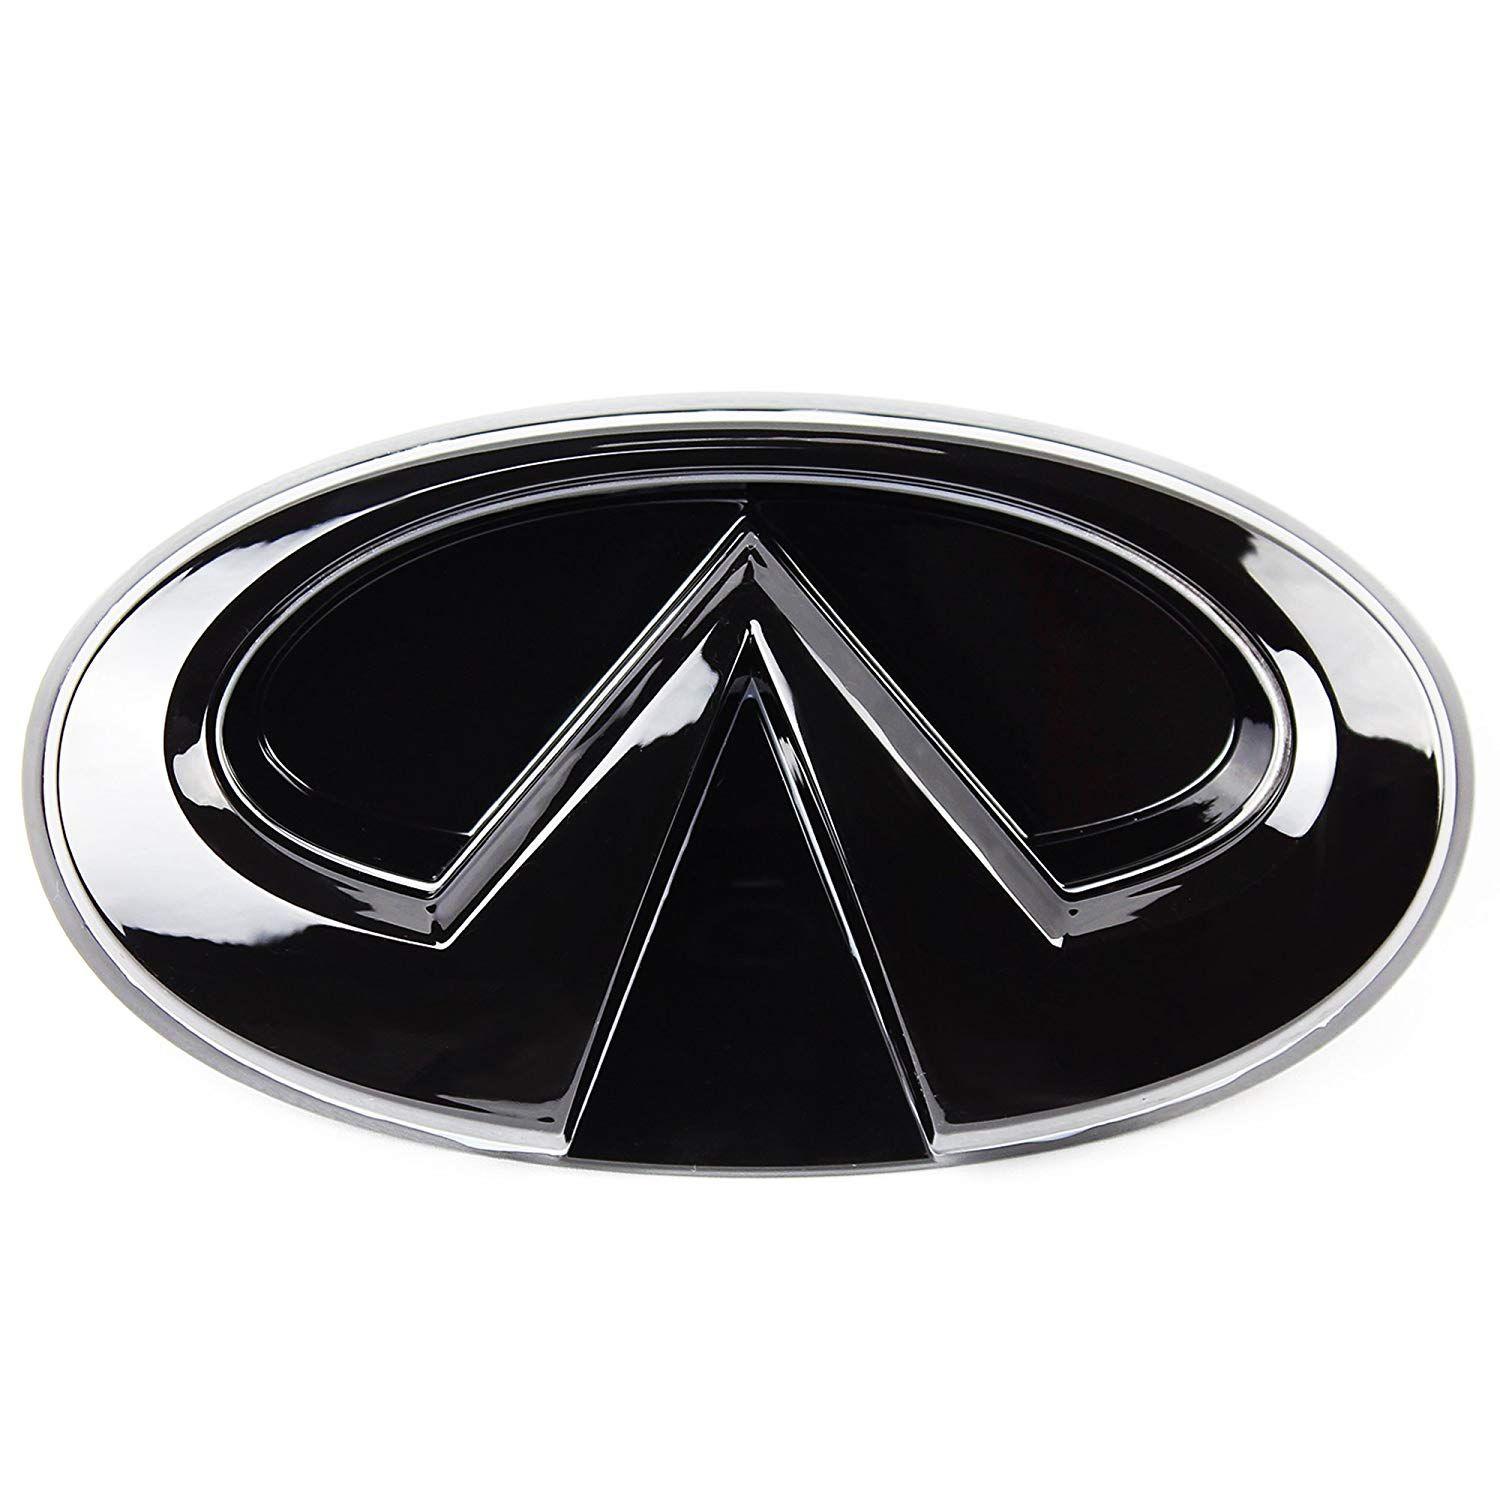 Sedan Logo - Amazon.com: JetStyle Infiniti G37 G25 LED Emblem, Black Edition ...